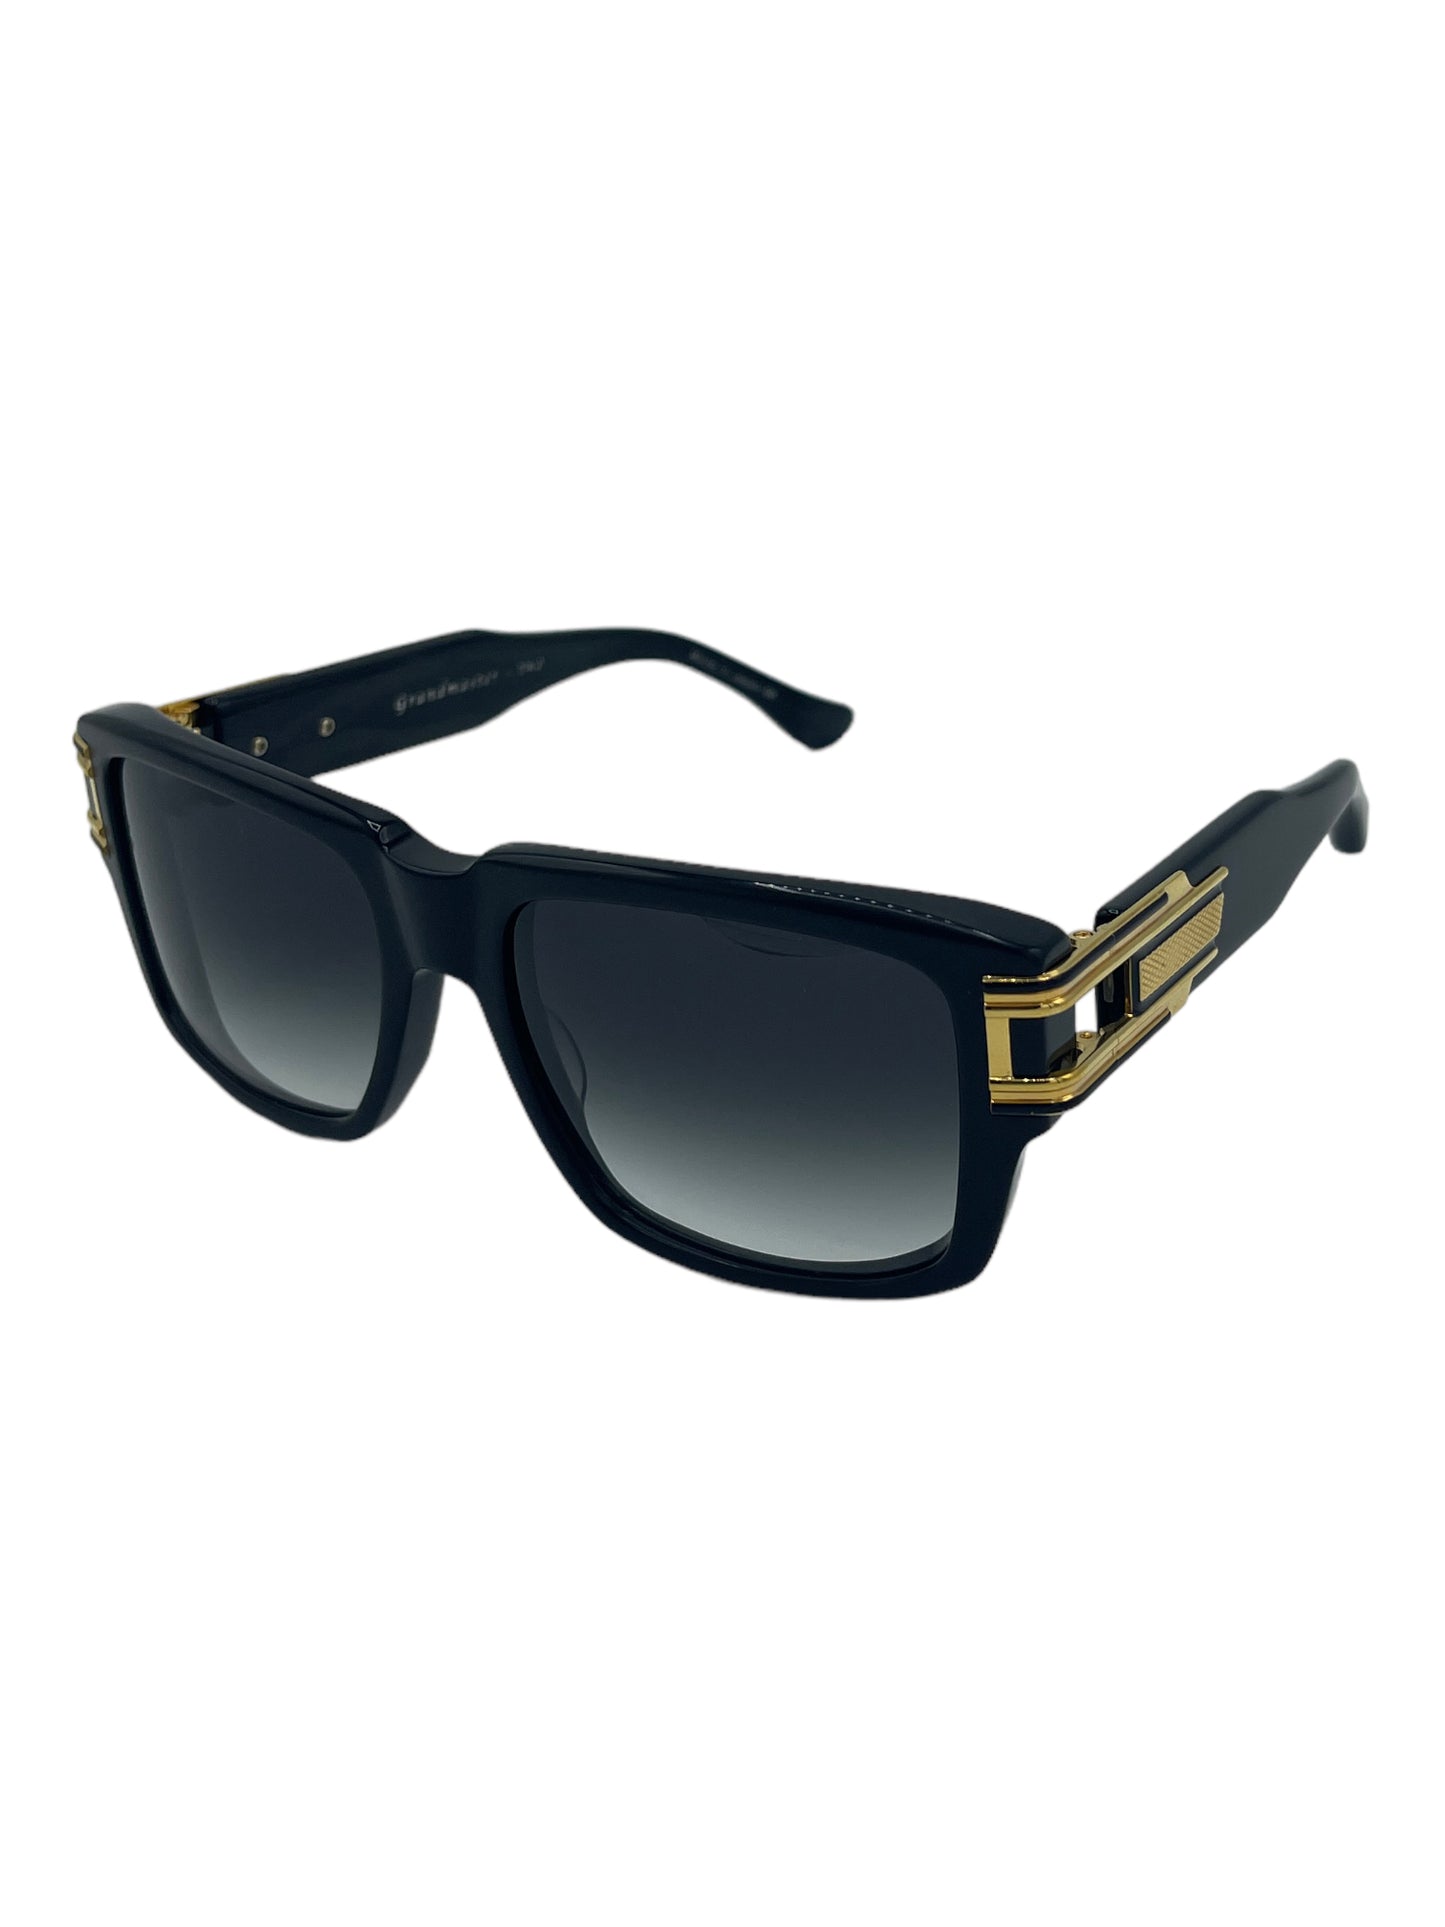 Dita Black And Gold ‘Grandmaster-Two’ Sunglasses